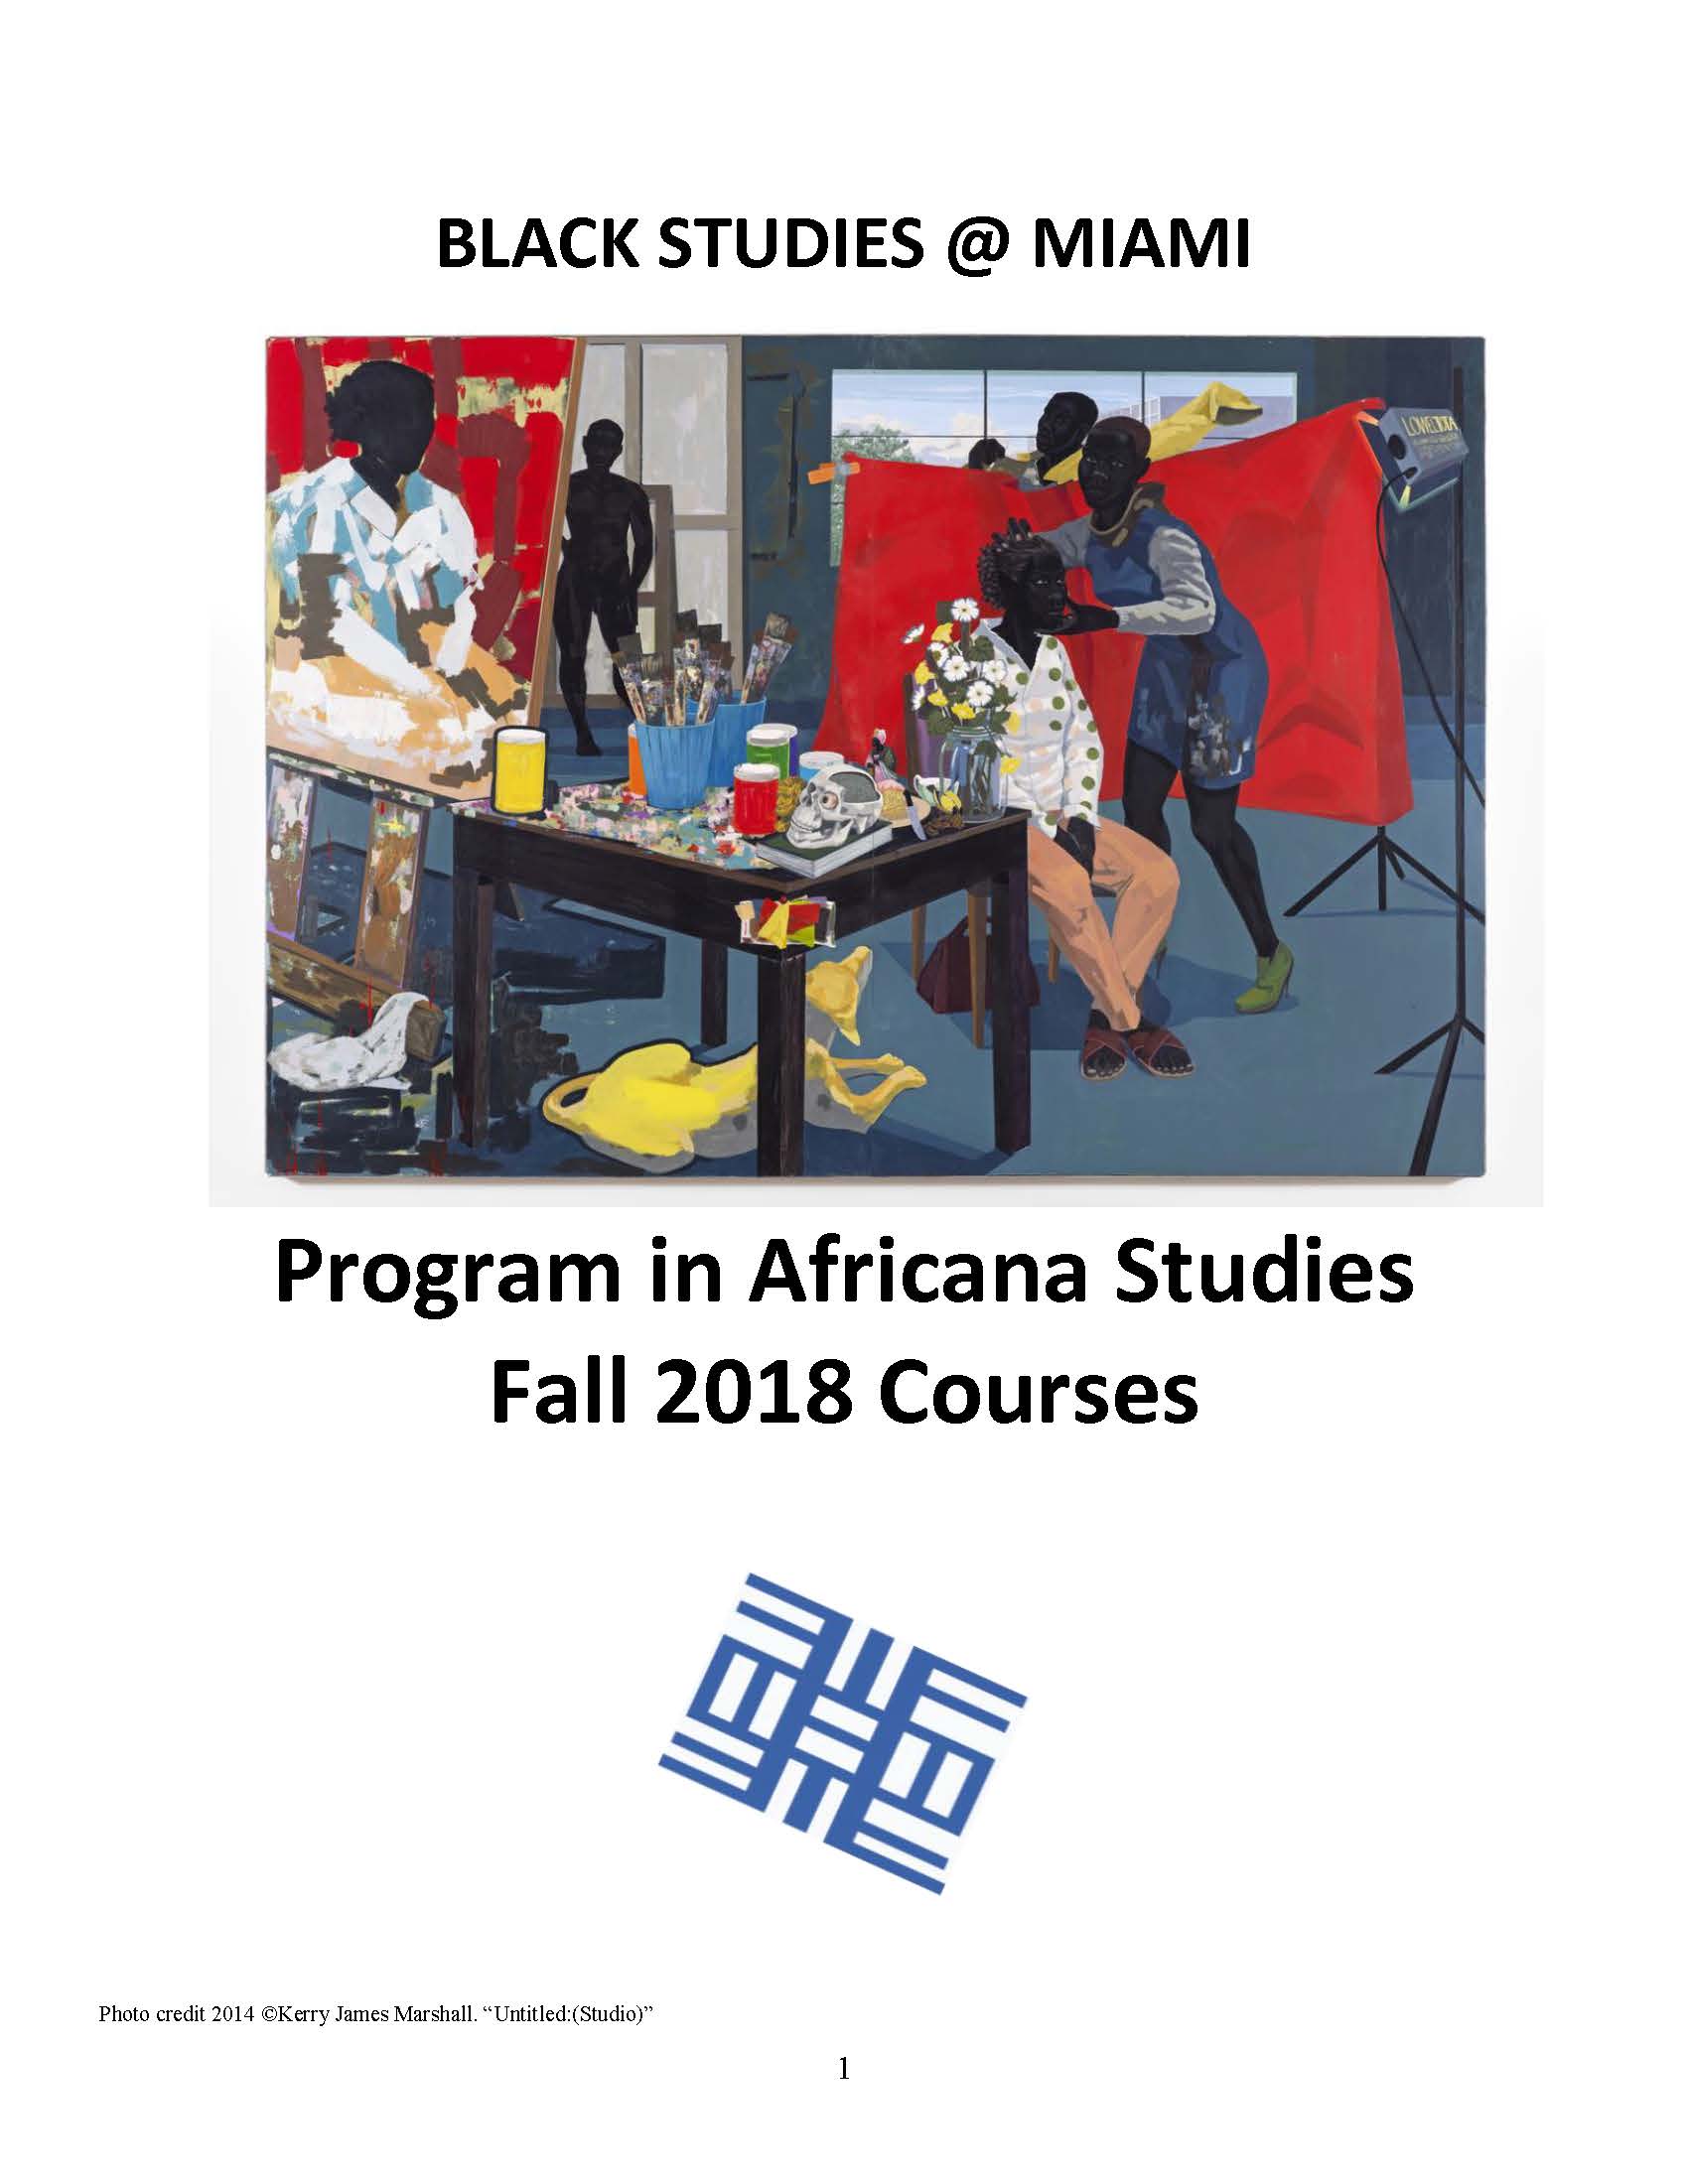 africana studies phd programs usa